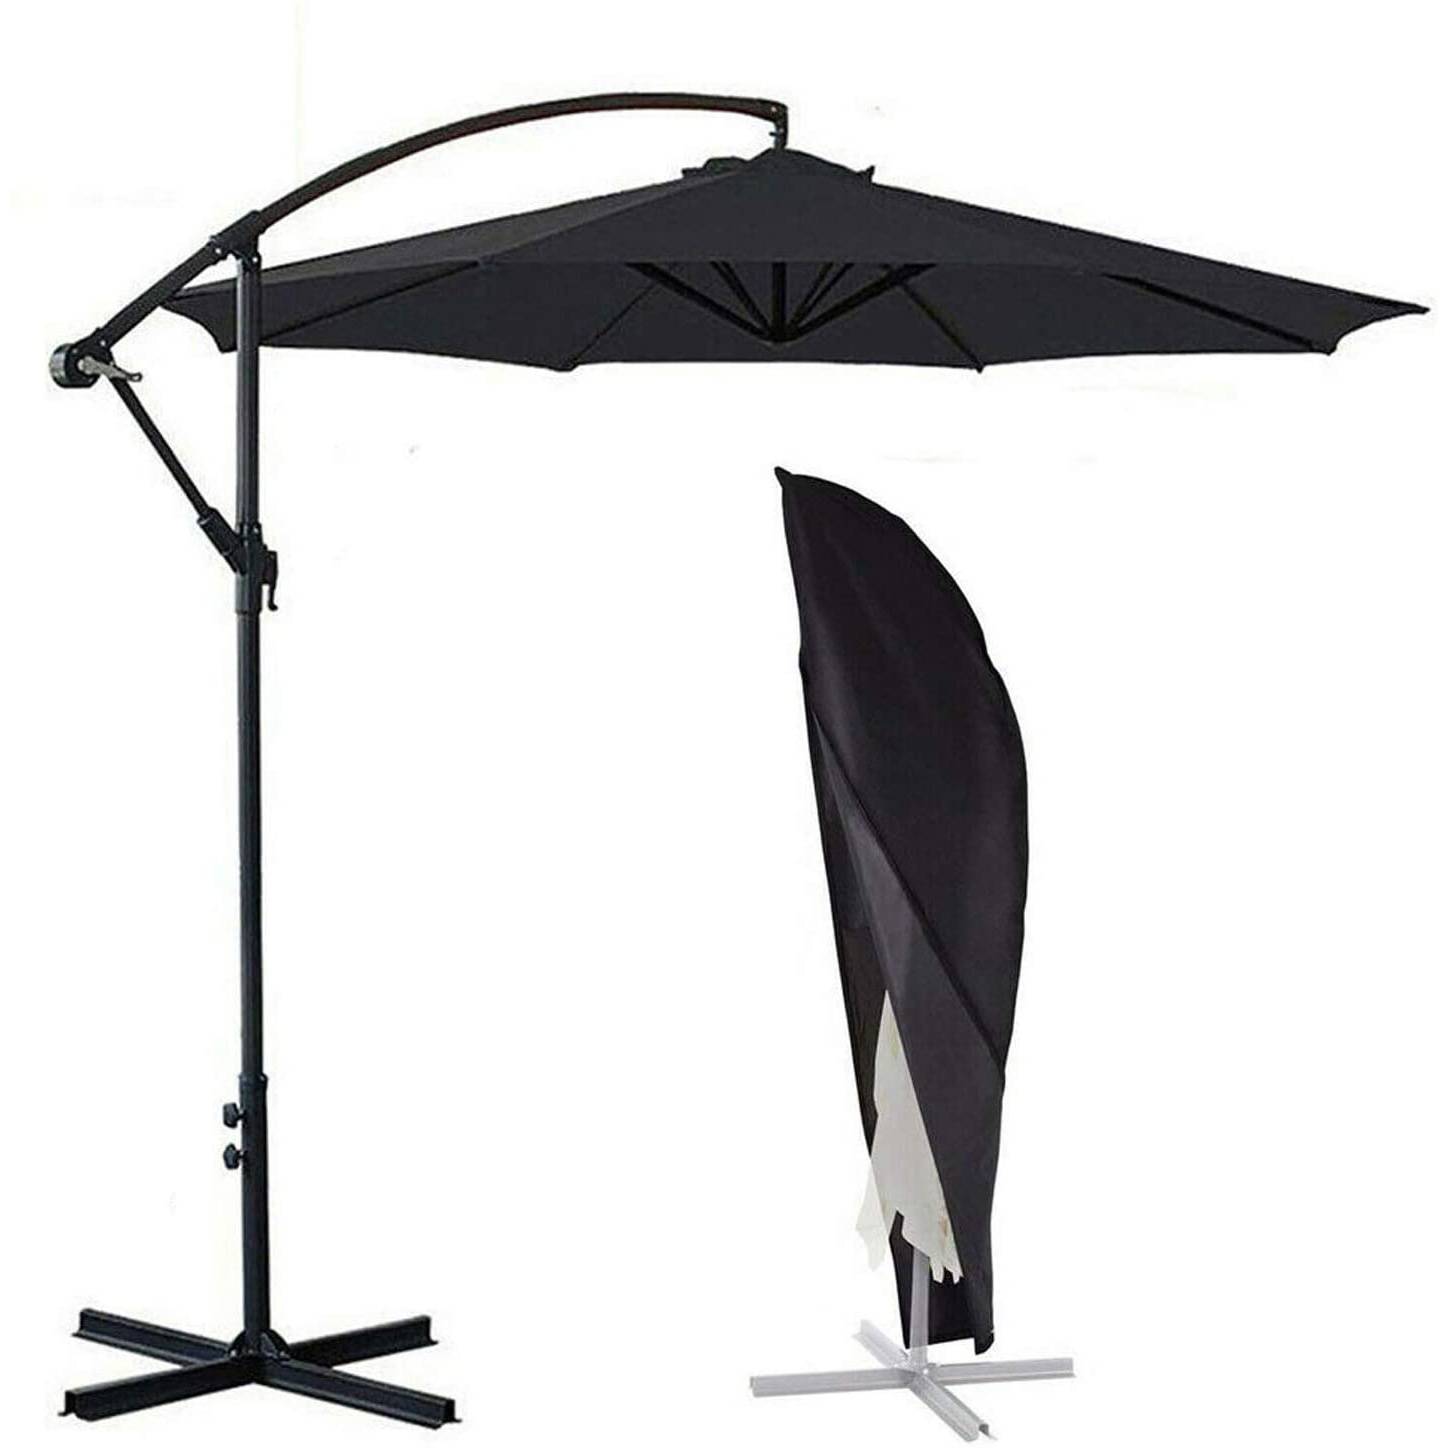 3m*6ribs high quality heavy duty large outdoor umbrella garden parasol patio umbrella